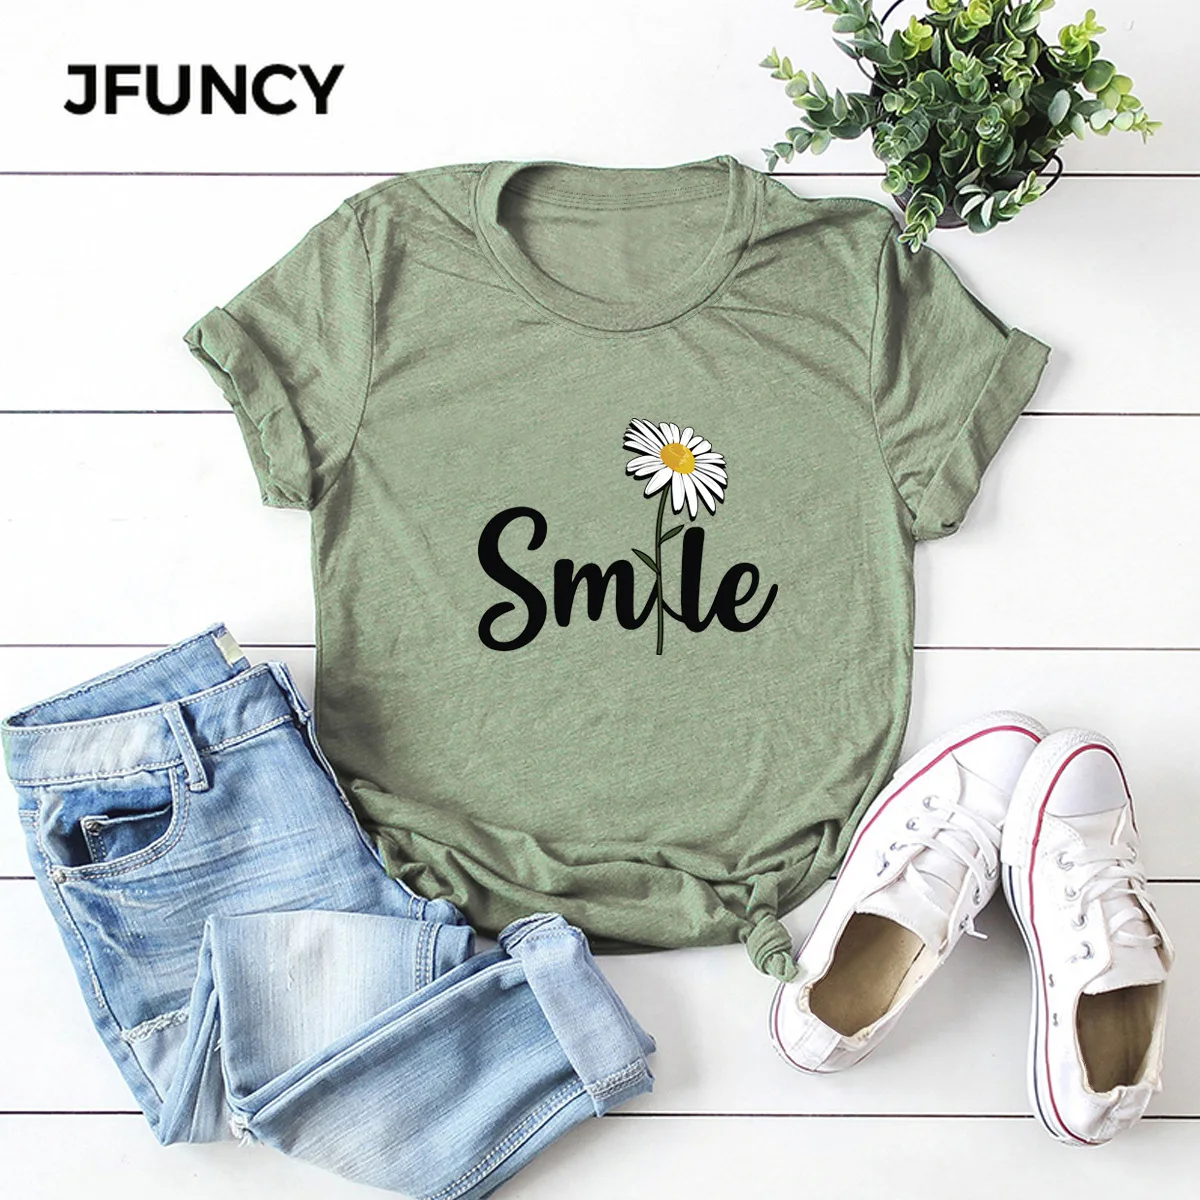 JFUNCY  Women Tops Cotton T-shirt Summer Short Sleeve Oversize Tshirt Flower Smile Print Casual Loose Female Tee Shirts